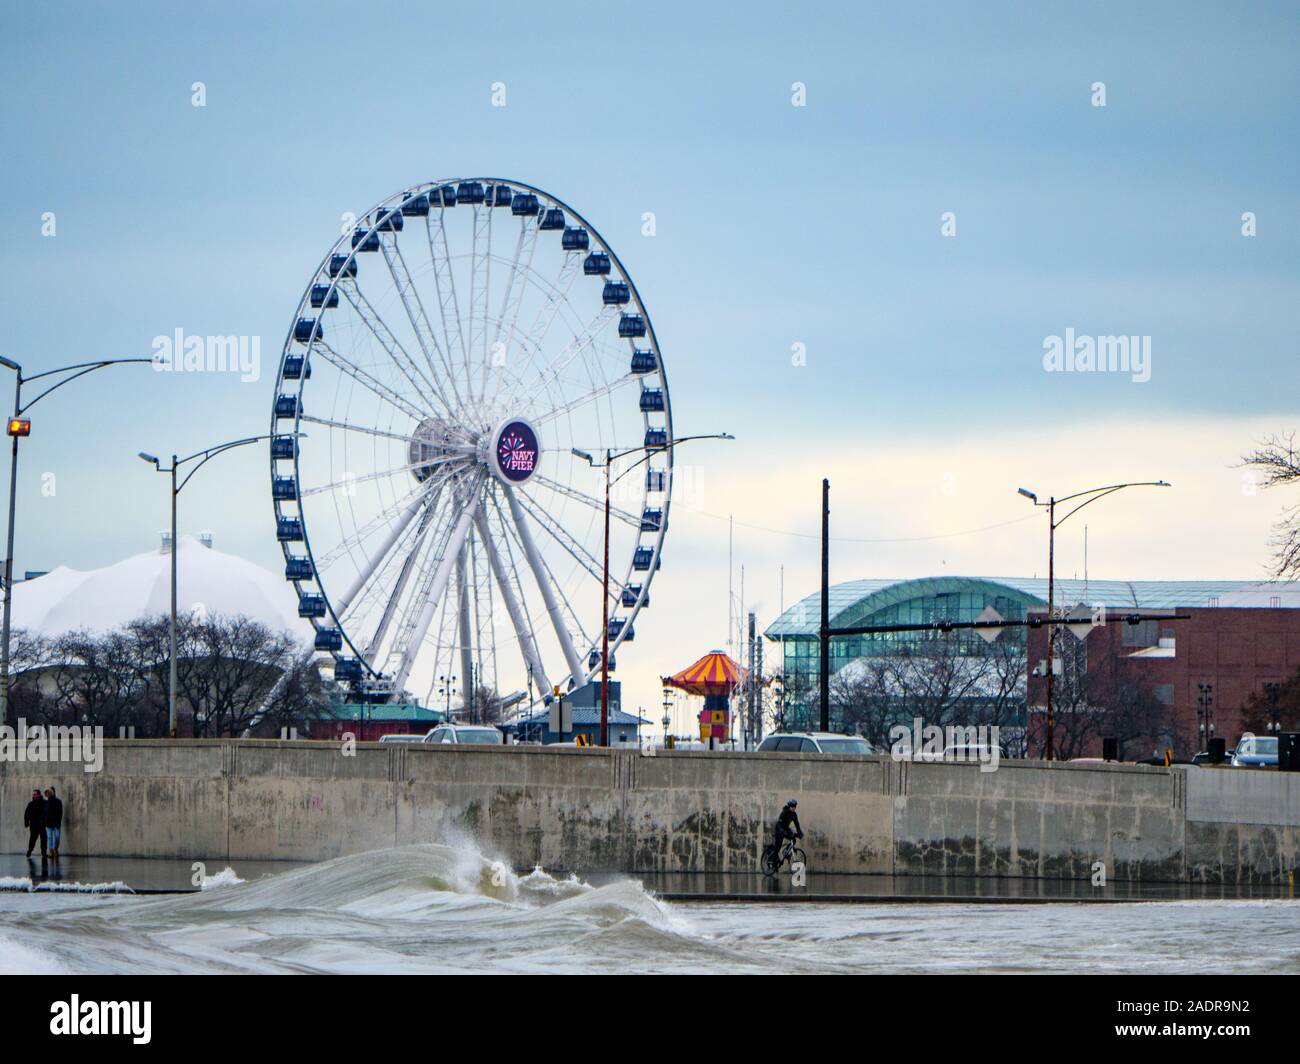 Navy Pier Ferris Wheel and surf. Chicago, Illinois. Stock Photo